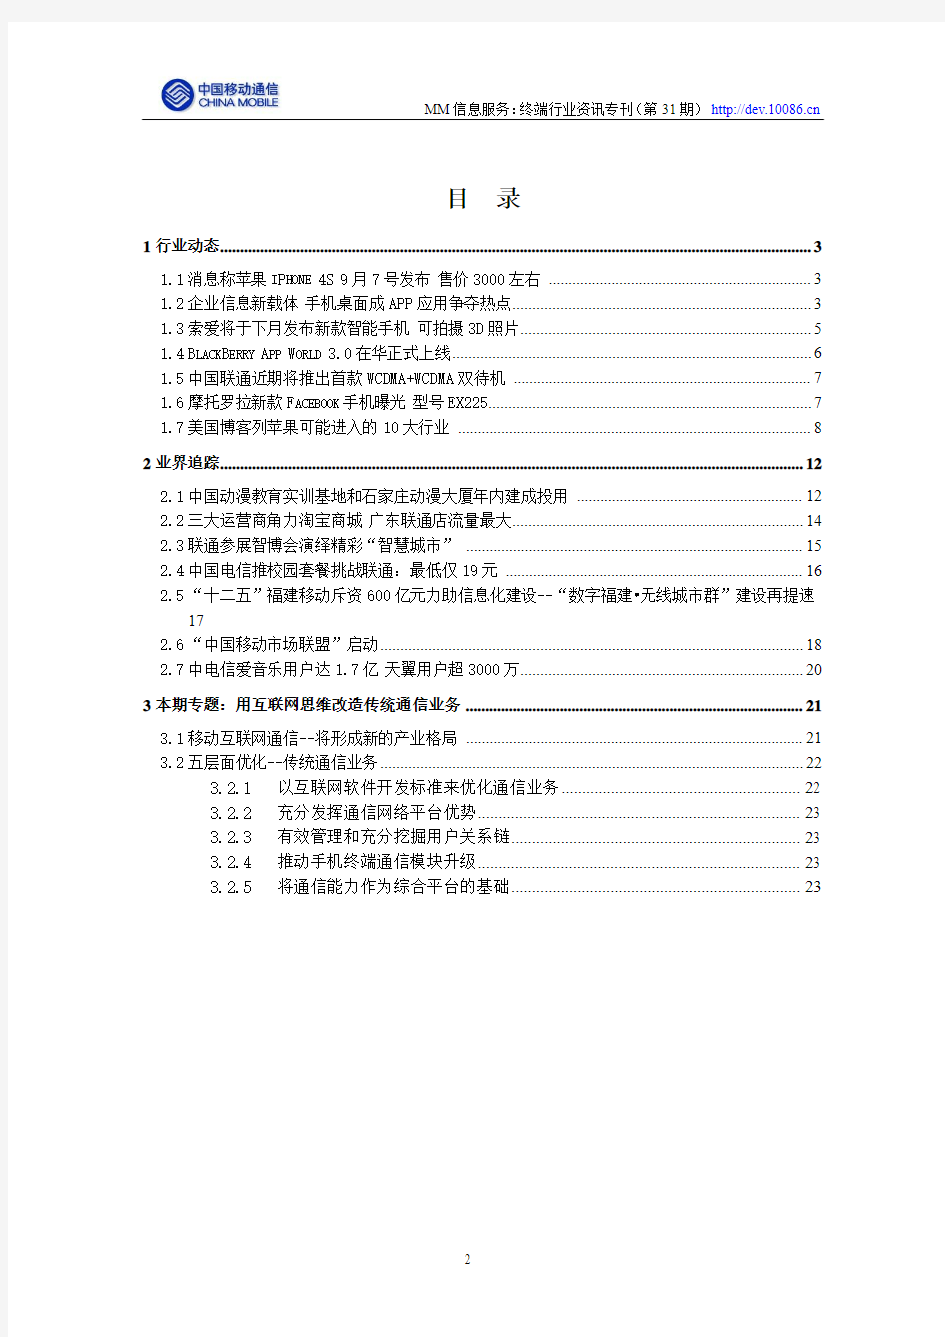 MM信息服务：终端行业资讯专刊(第31期)